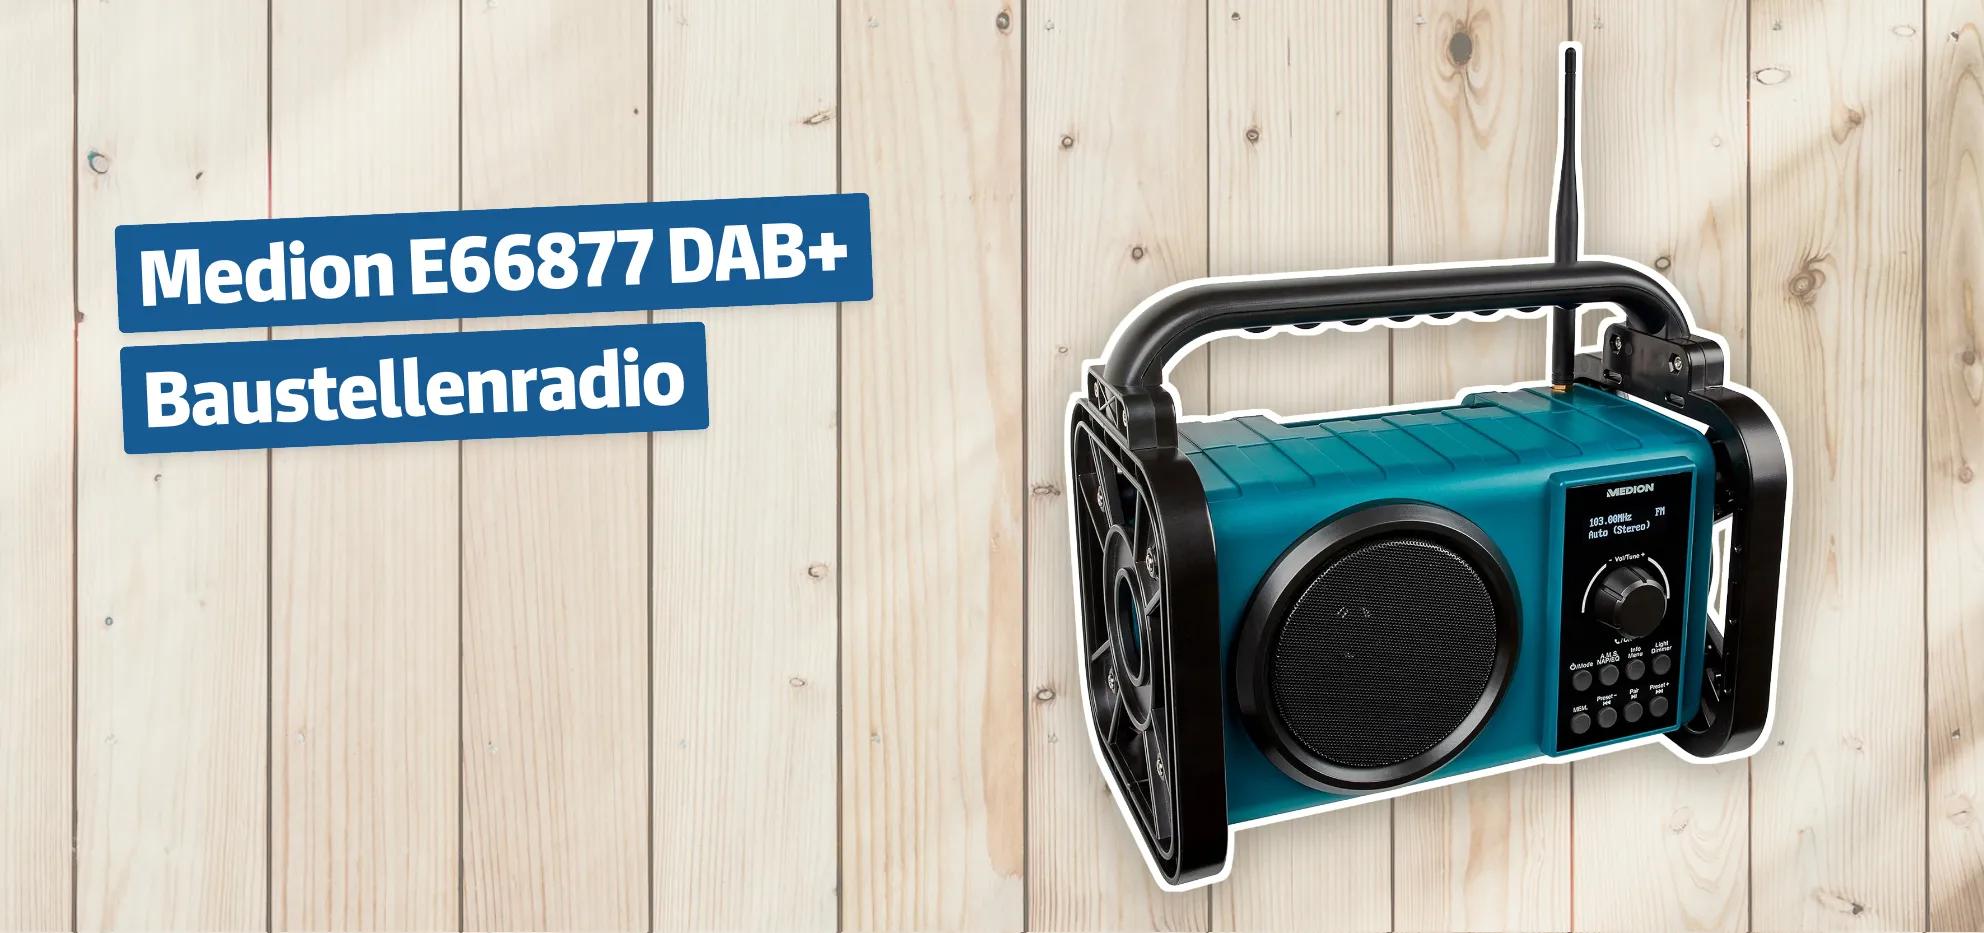 Medion E66877 DAB+ Baustellenradio